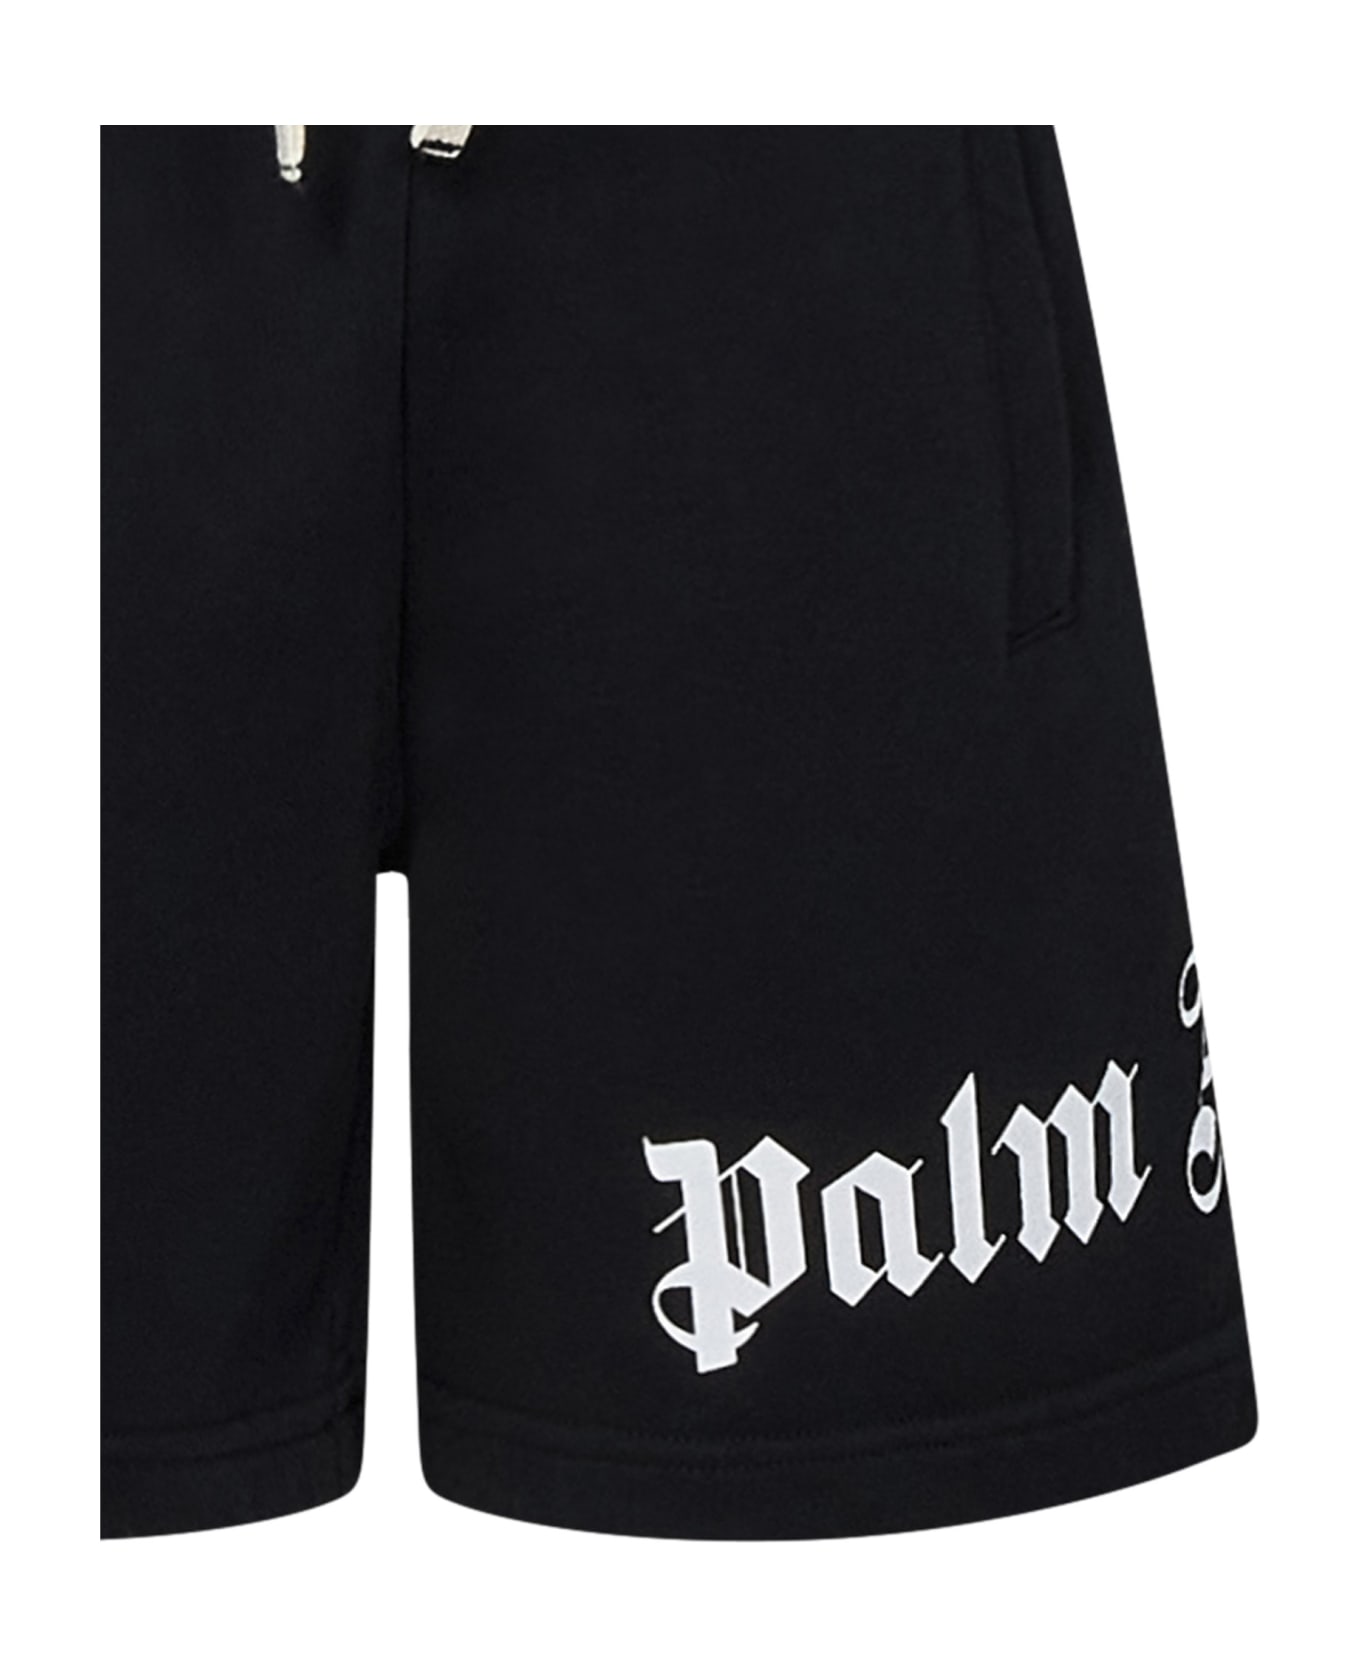 Palm Angels Kids Shorts - Black